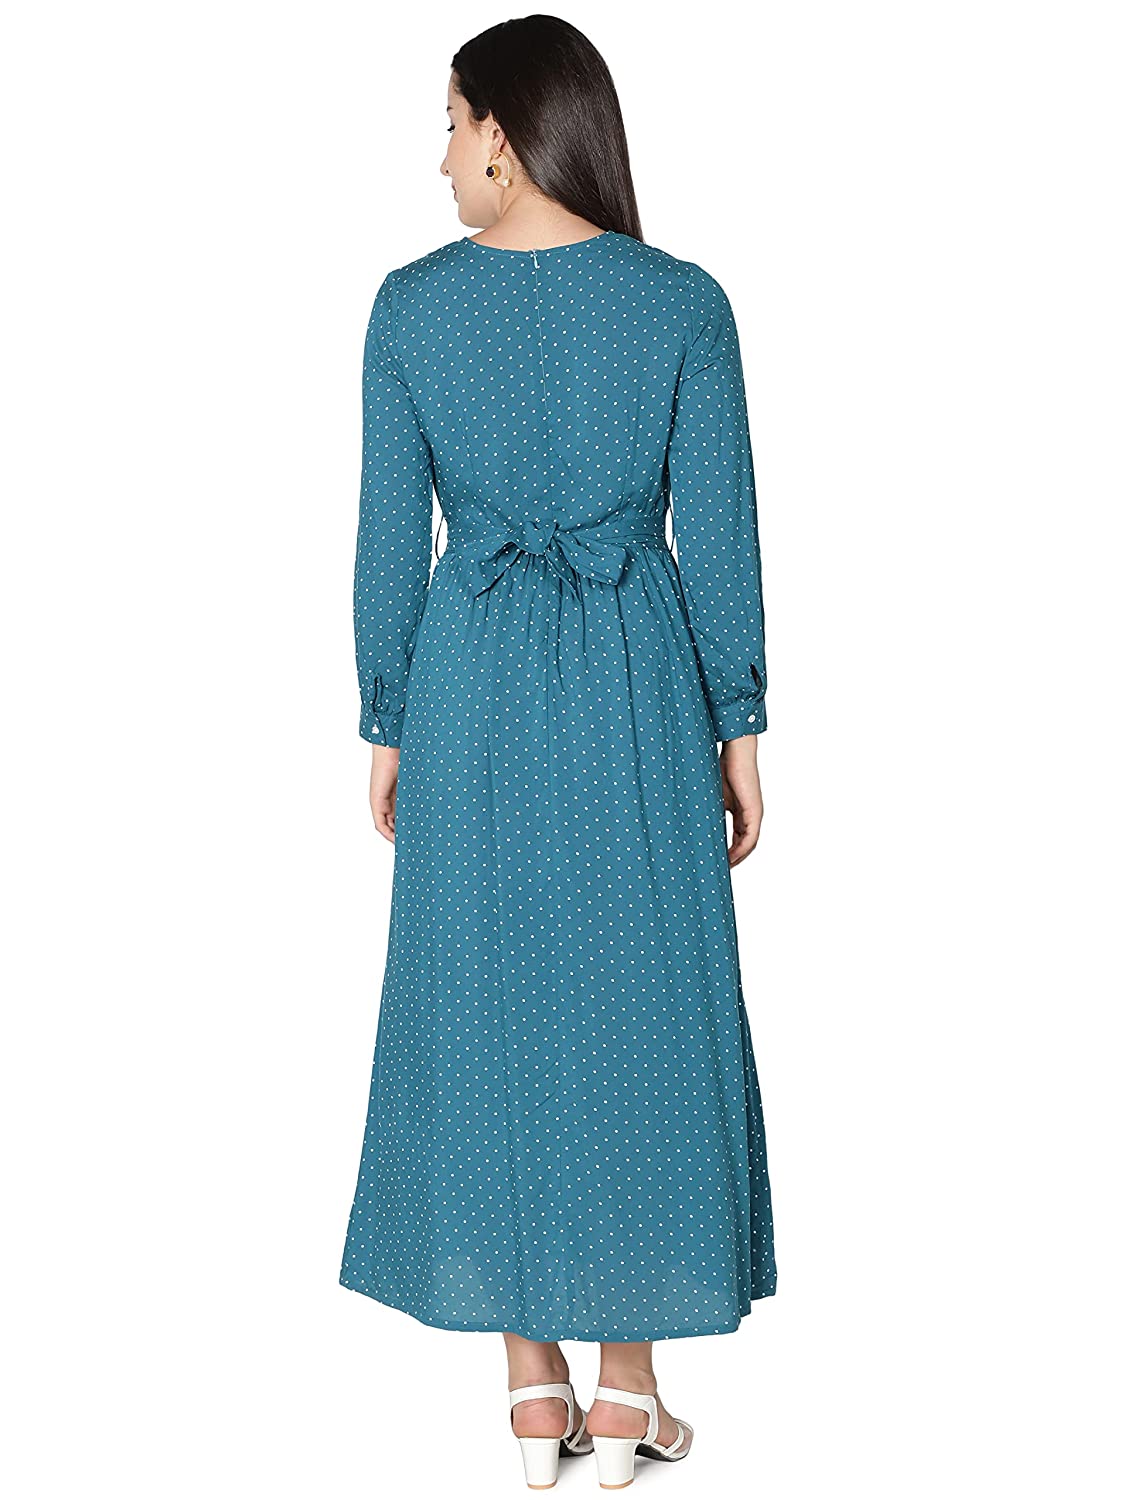 NUEVOSDAMAS Women Rayon Dot Printed Designer Dress | Latest Western Maxi Dress | Full Sleeve Dress for Women | Stylish Summer Maxi Dresses -  Dresses in Sri Lanka from Arcade Online Shopping - Just Rs. 5899!